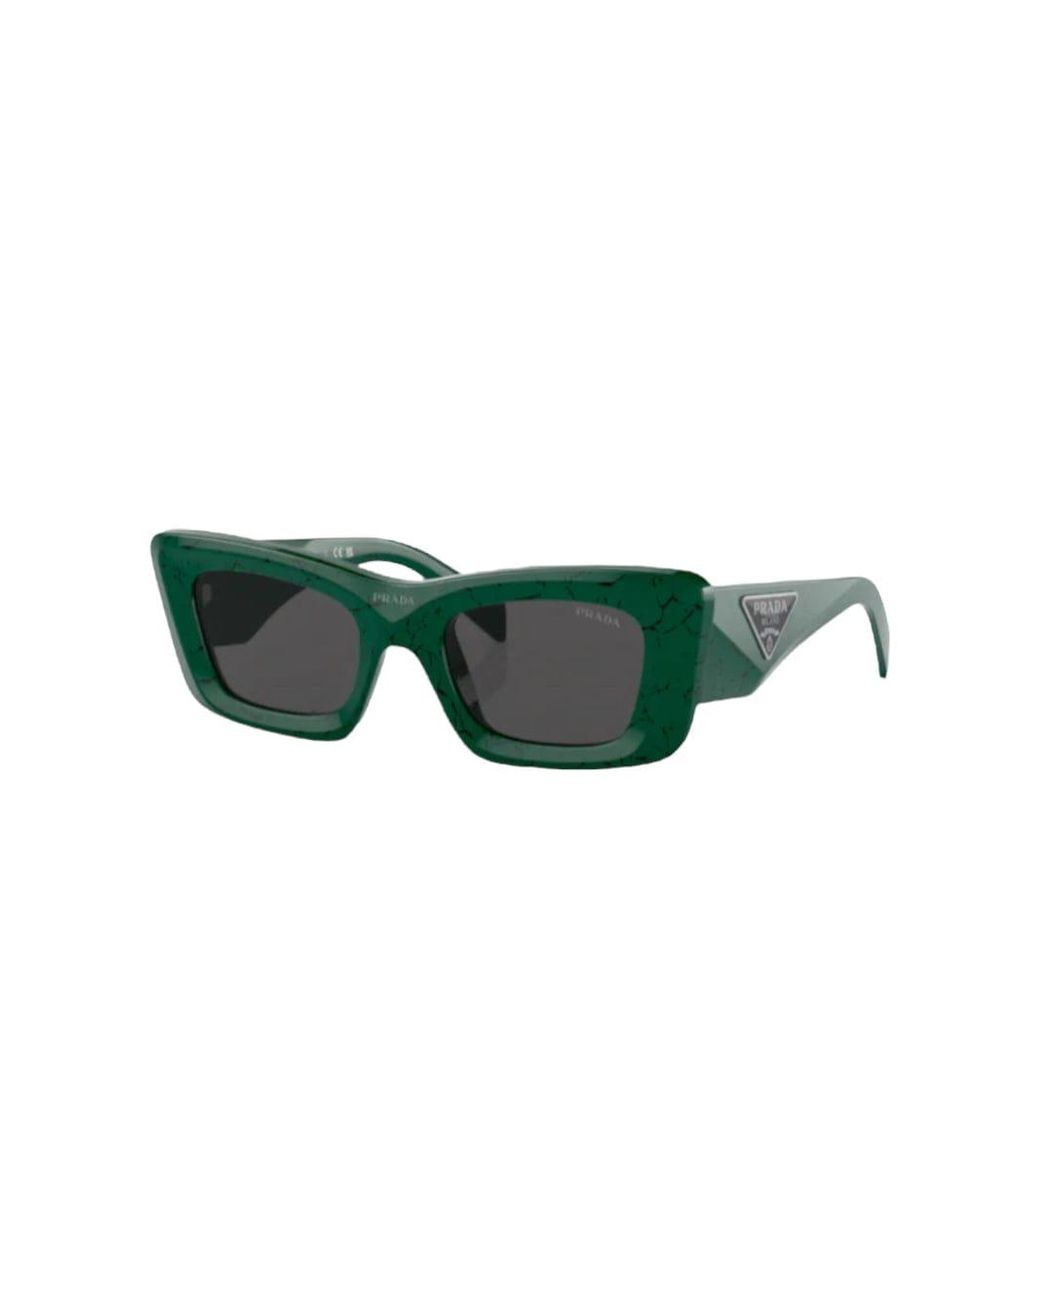 Prada Spr 13w Sunglasses in Green | Lyst